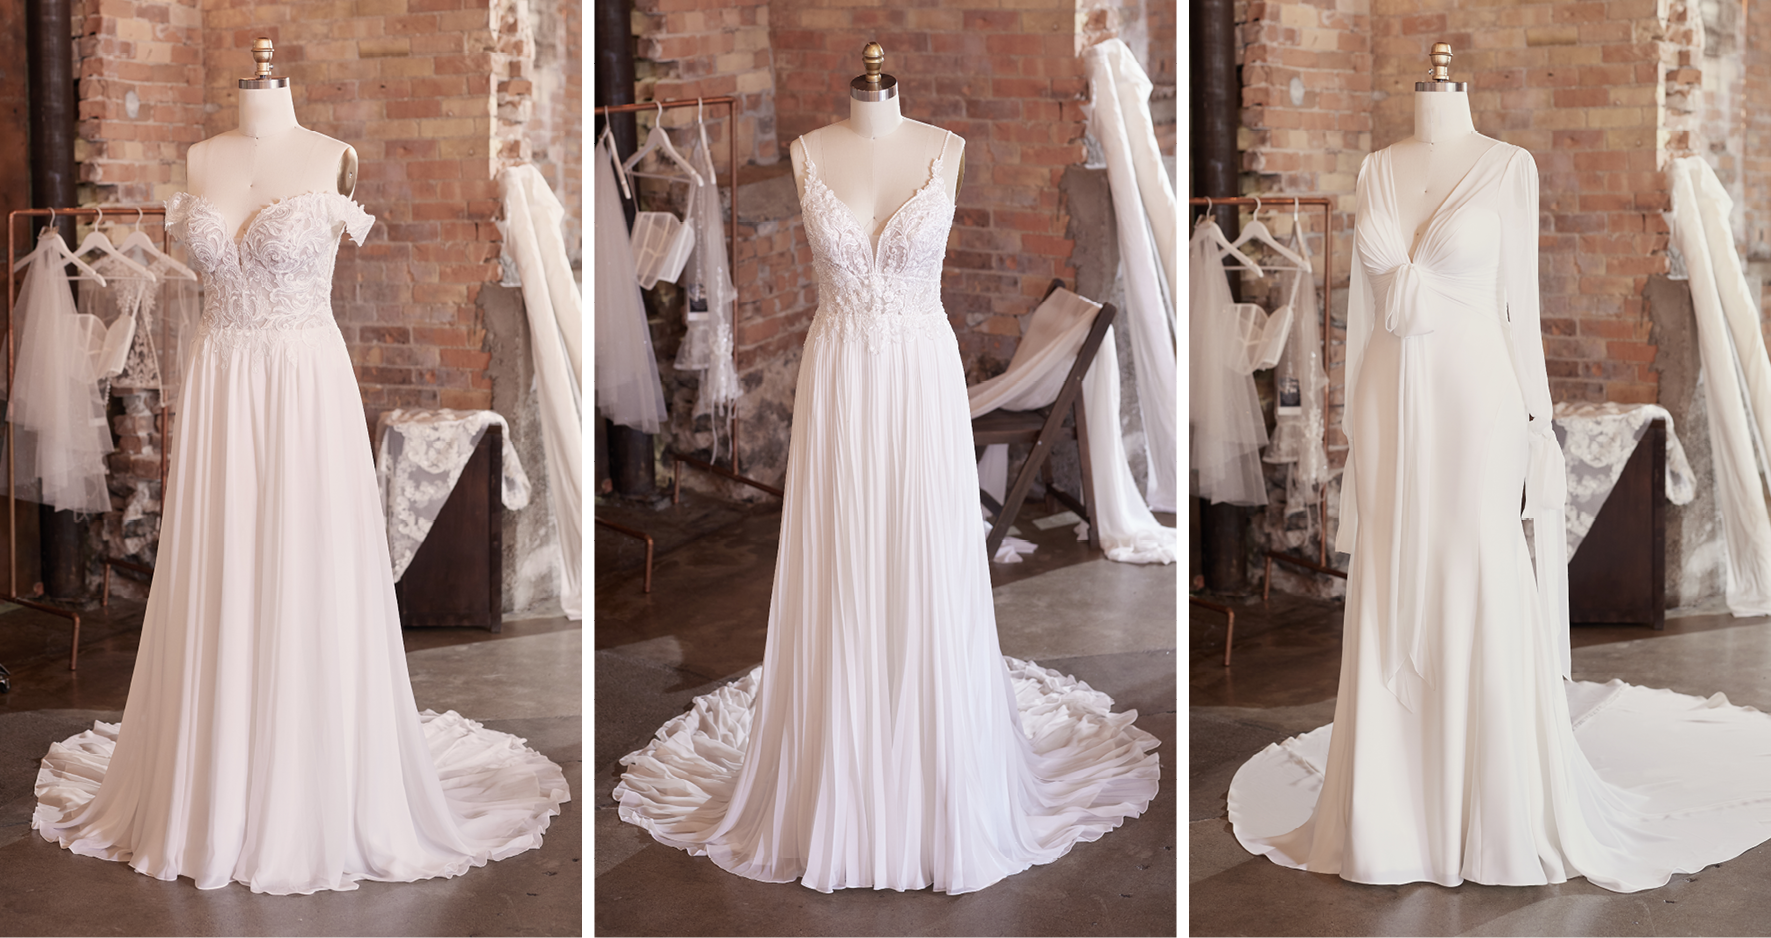 Collage of Three Chiffon Wedding Dresses on Mannequins